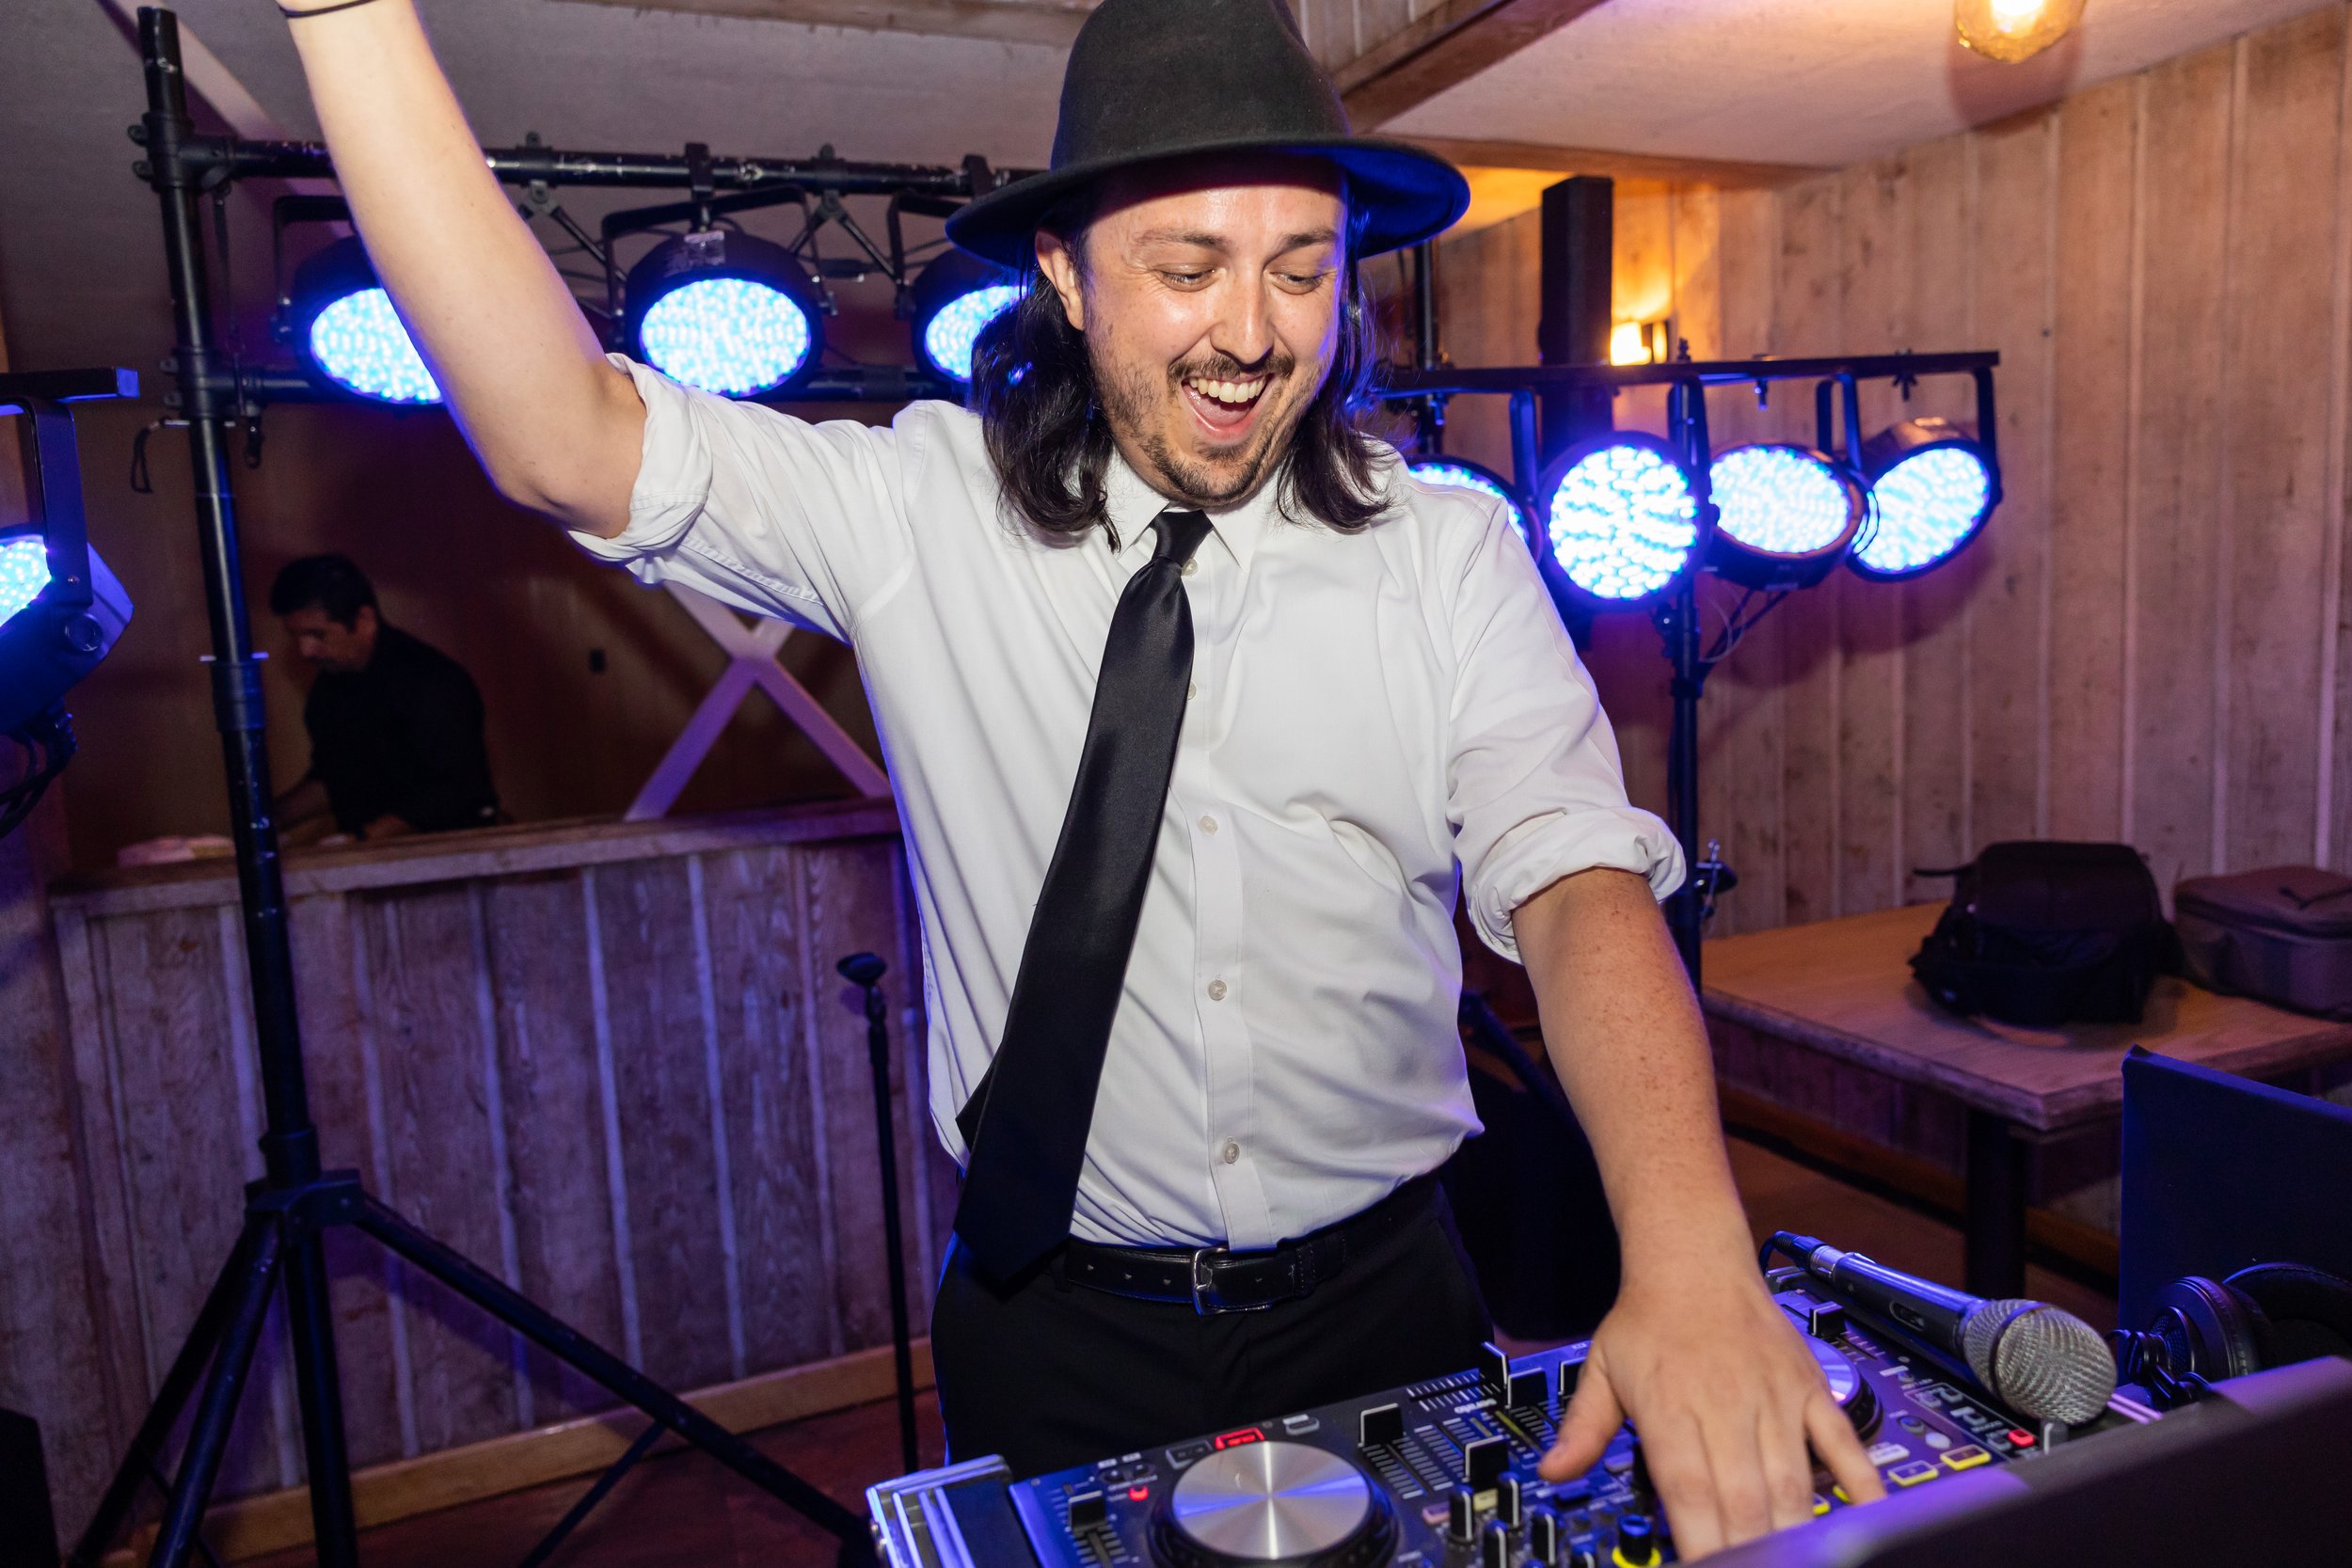 DJ Jon Don Myers performs at weddings and special events - bride - the knot - thumbtack - zola - wedding wire - best dj - philadelphia - pennsylvania - new jersey - new york weddings.jpeg